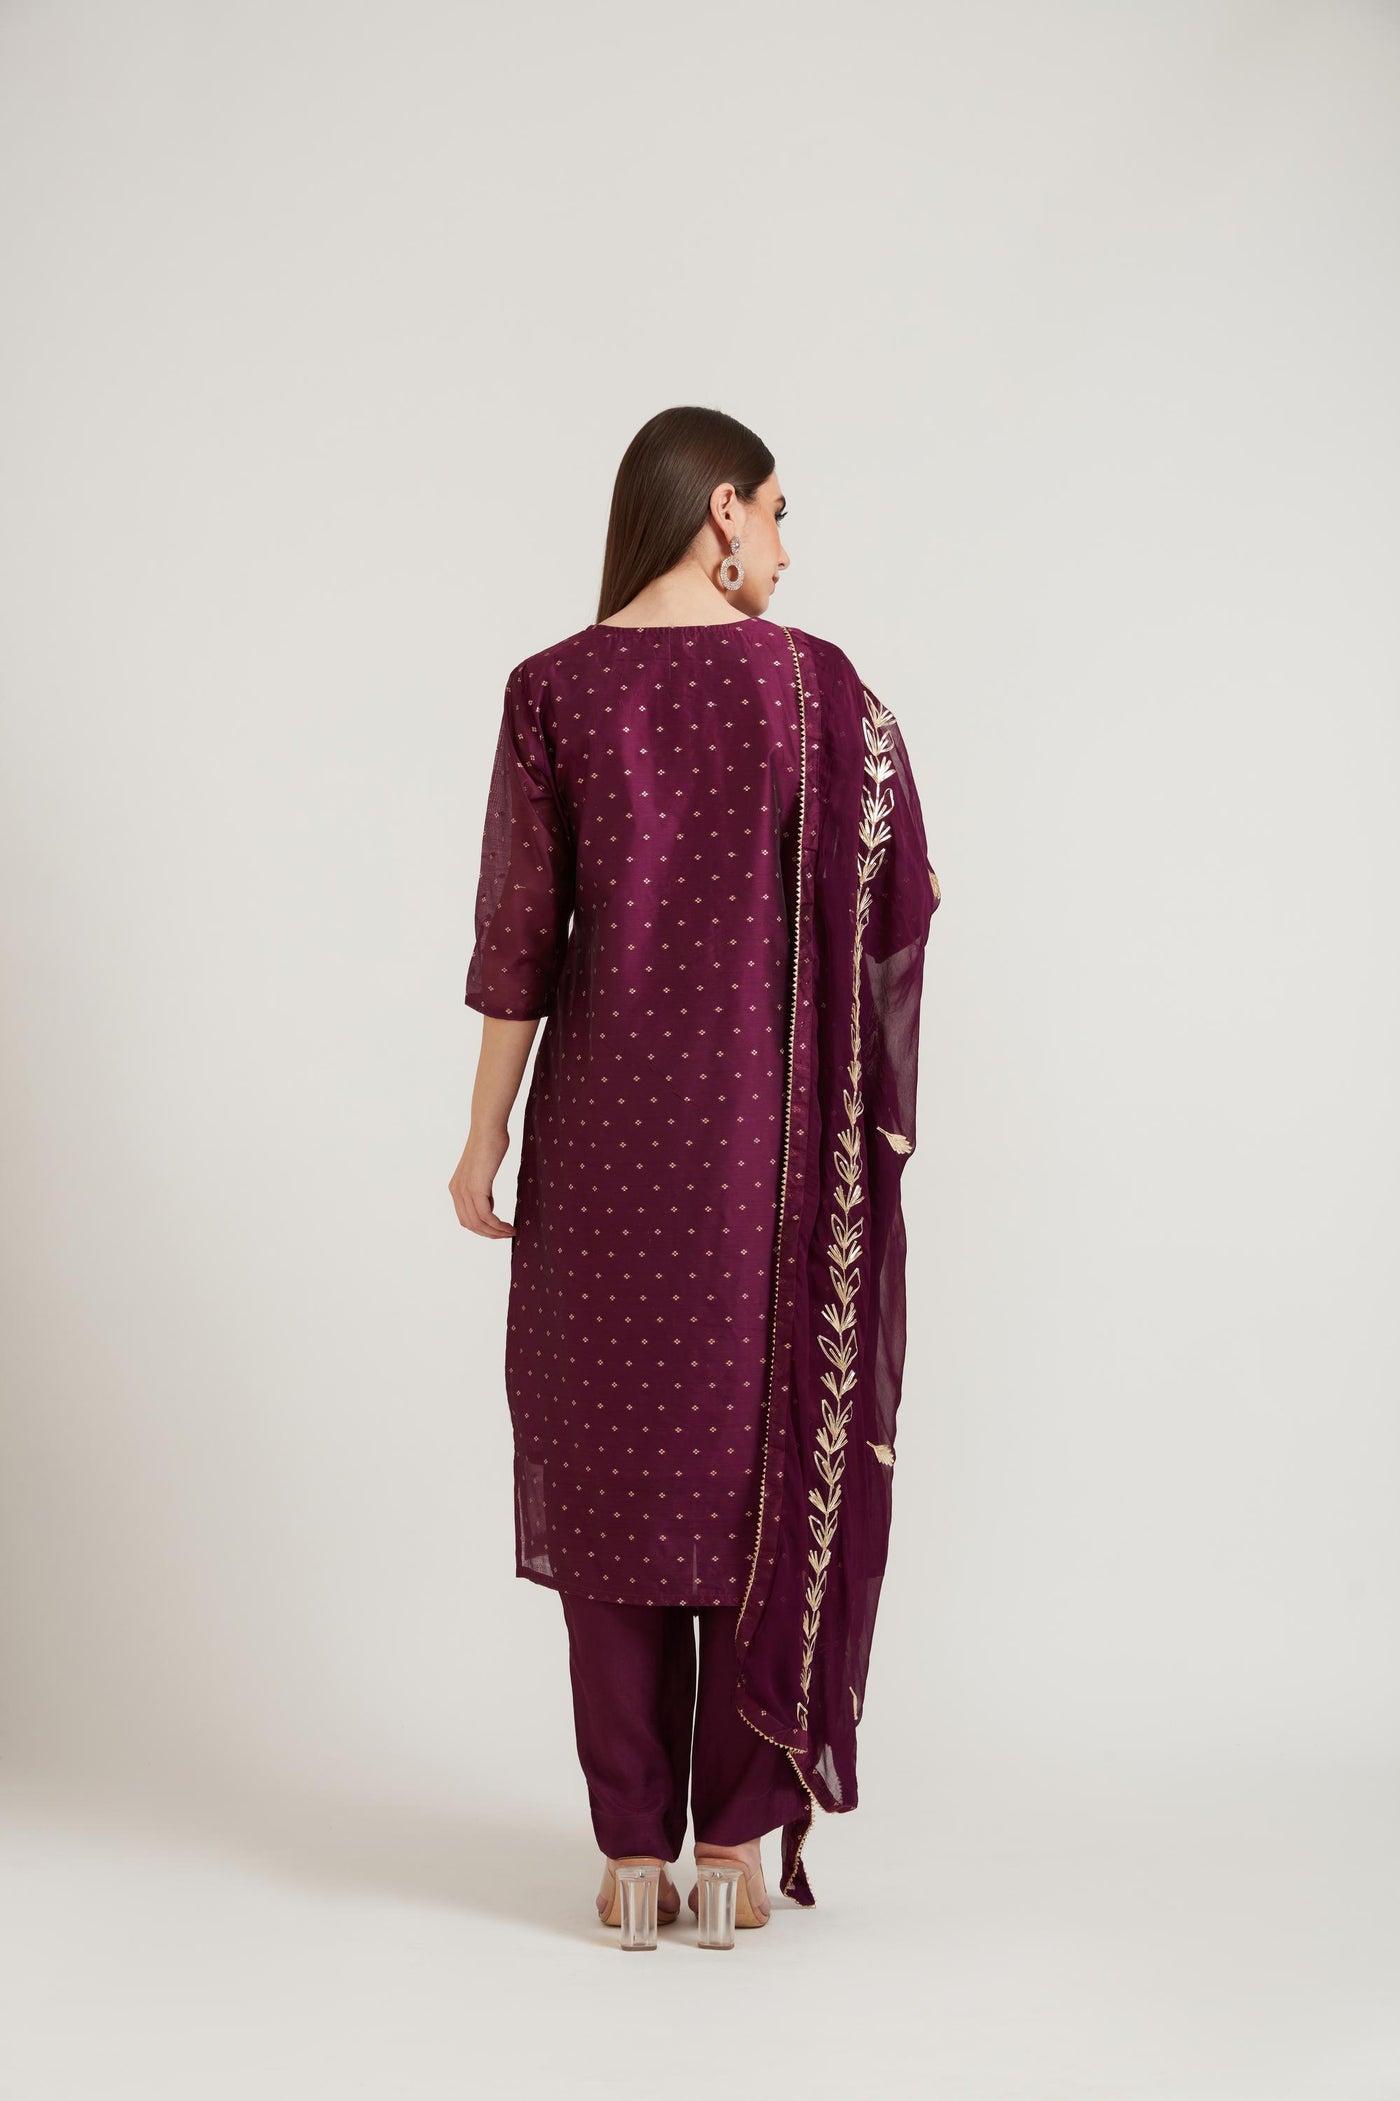 Neeru's Lavender Color Chanderi Fabric Suit Set